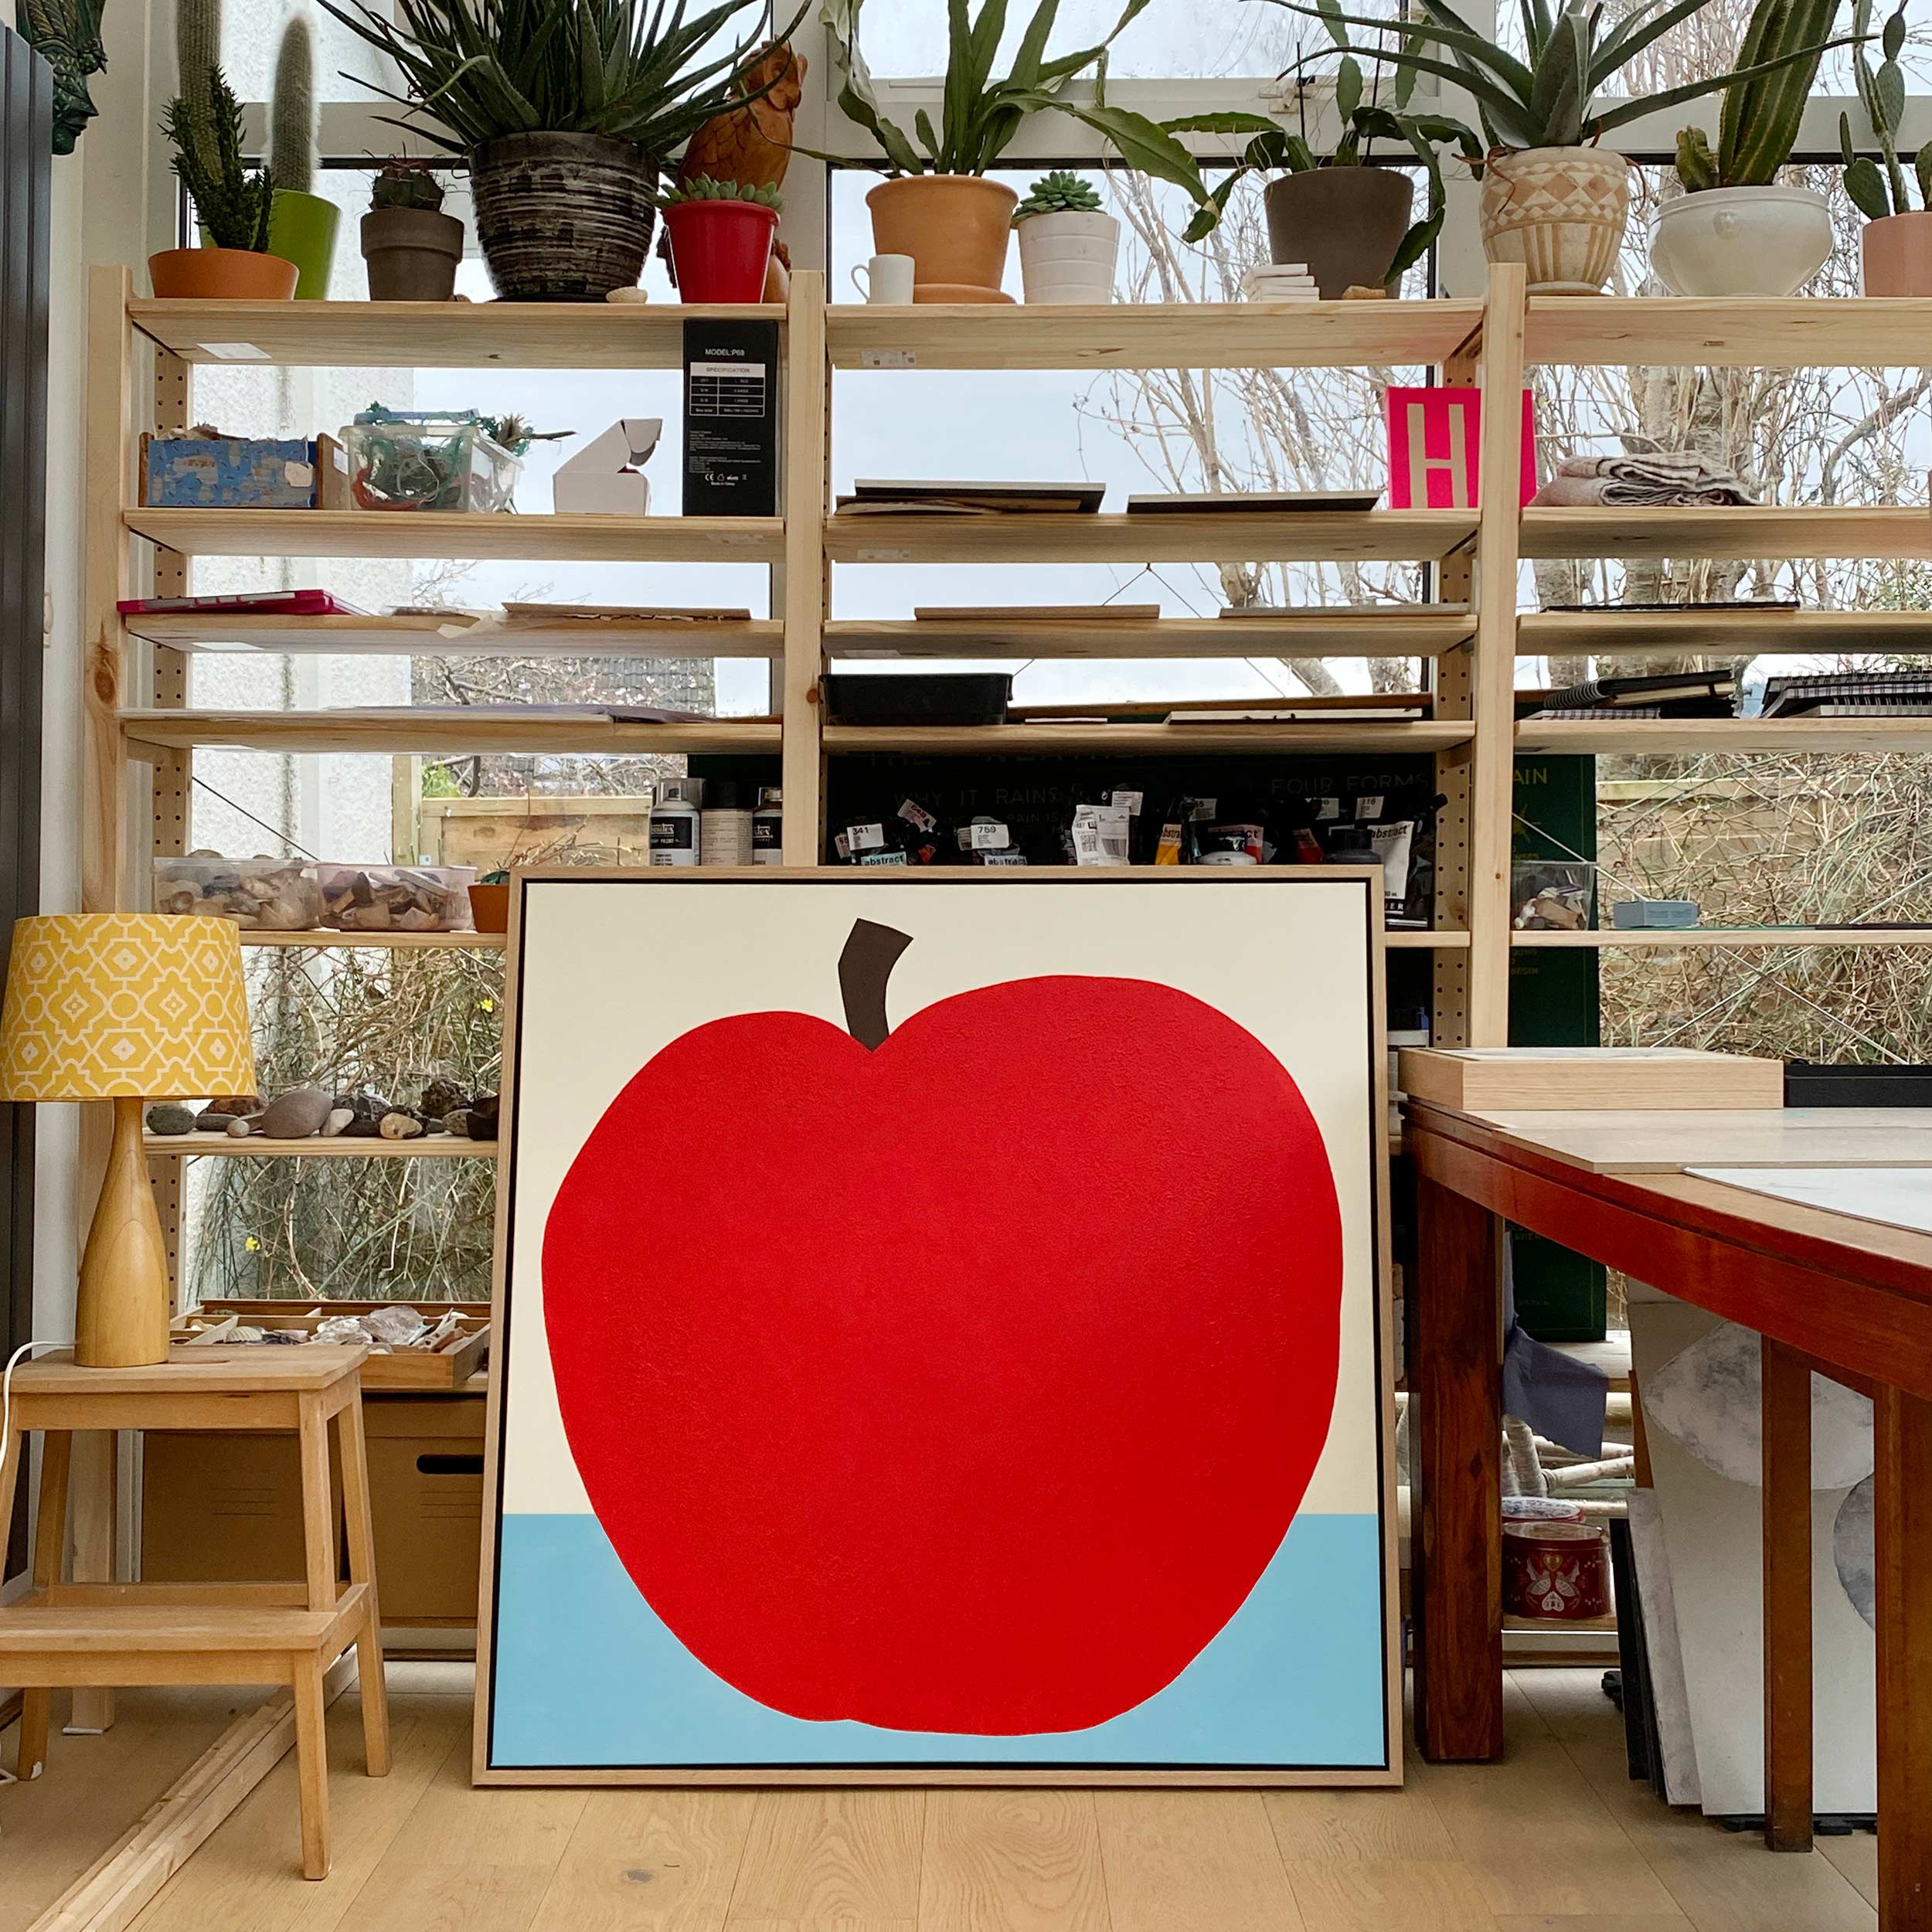 Apple painting